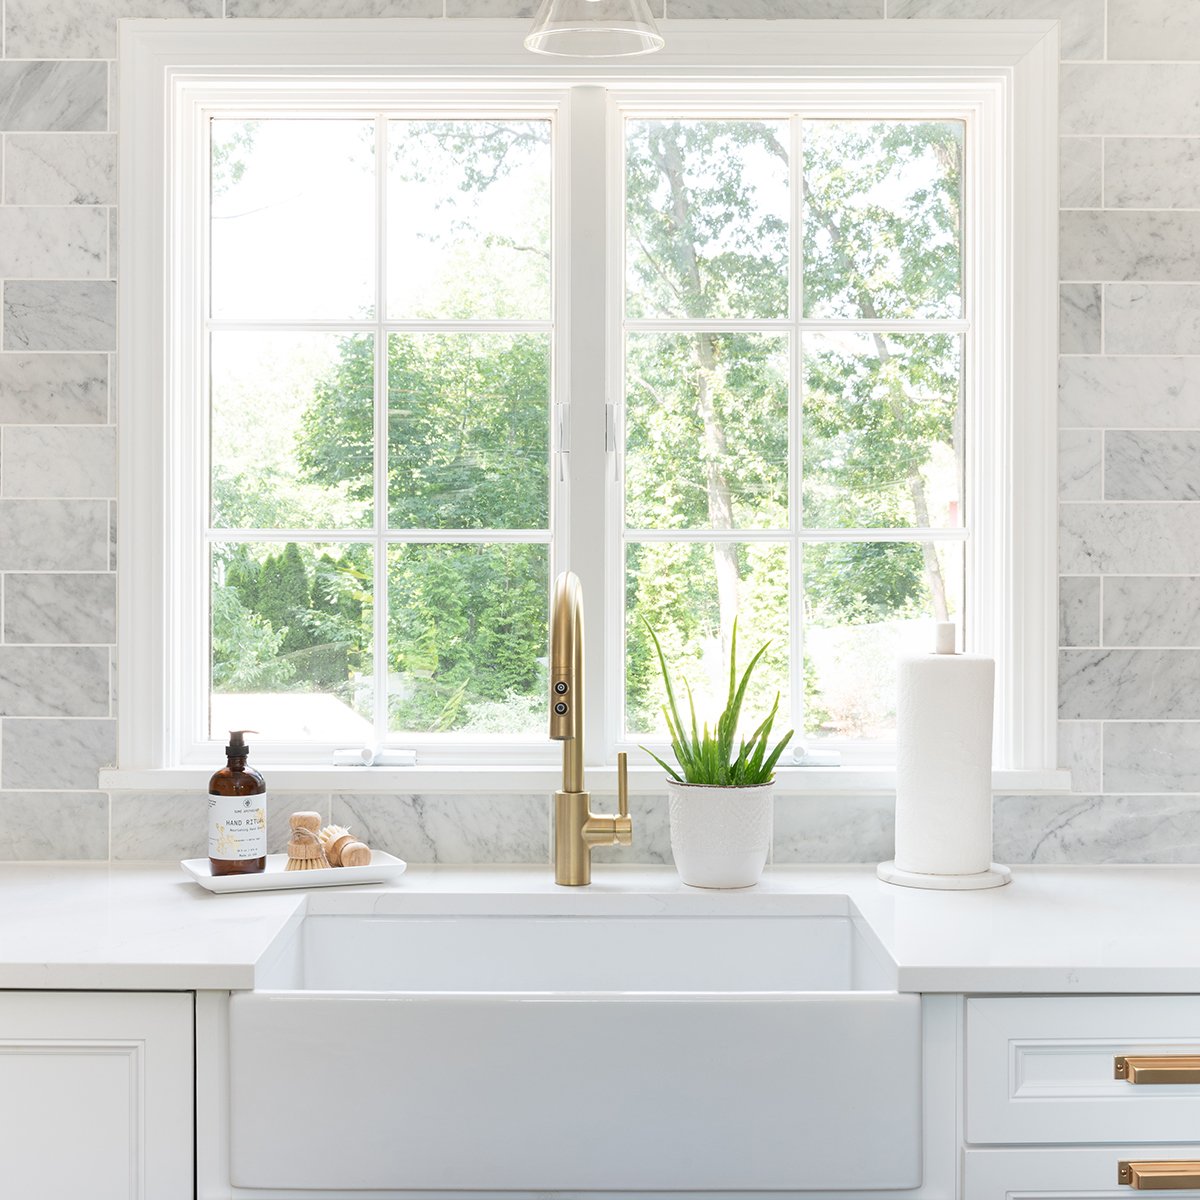 Beautiful Backsplash Ideas For Kitchens With White Cabinets